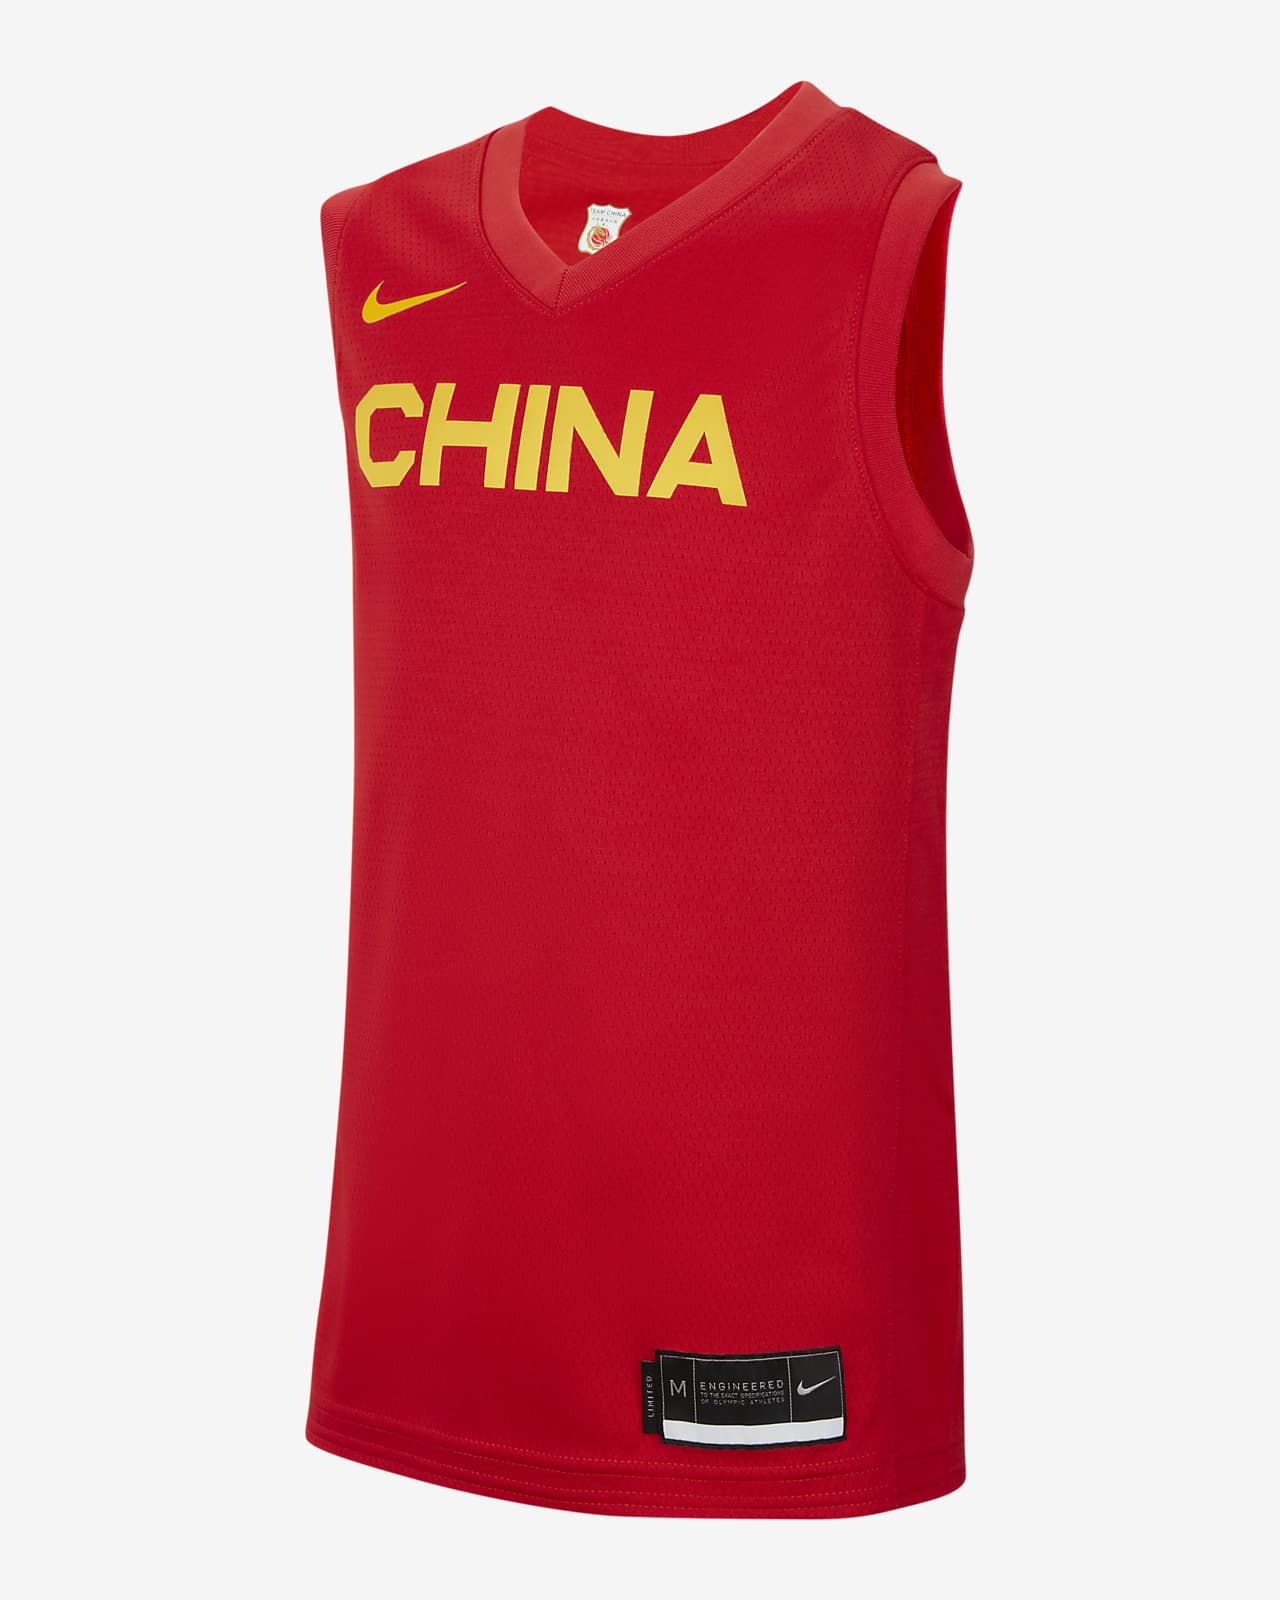 Maillot de basket Nike Chine (Road) pour ado